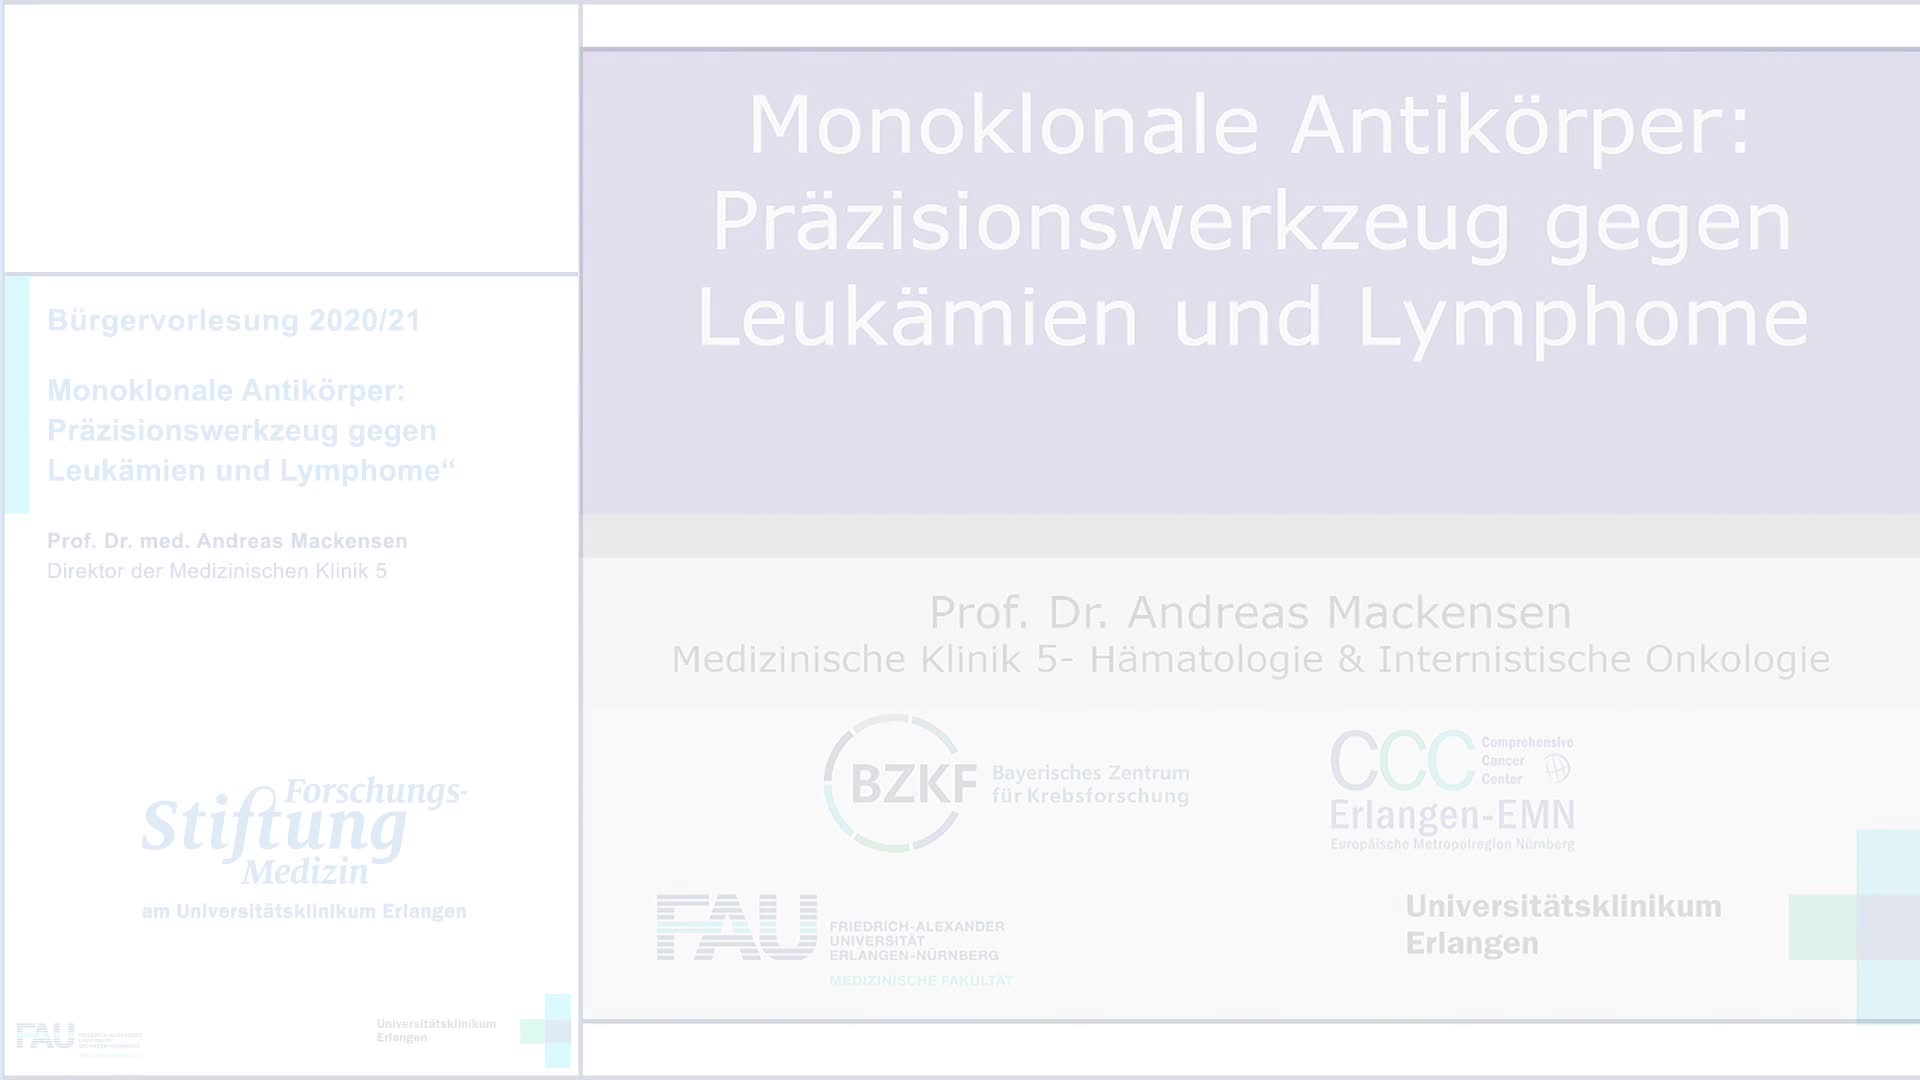 Monoklonale Antikörper:  Präzisionswerkzeug gegen  Leukämien und Lymphome preview image